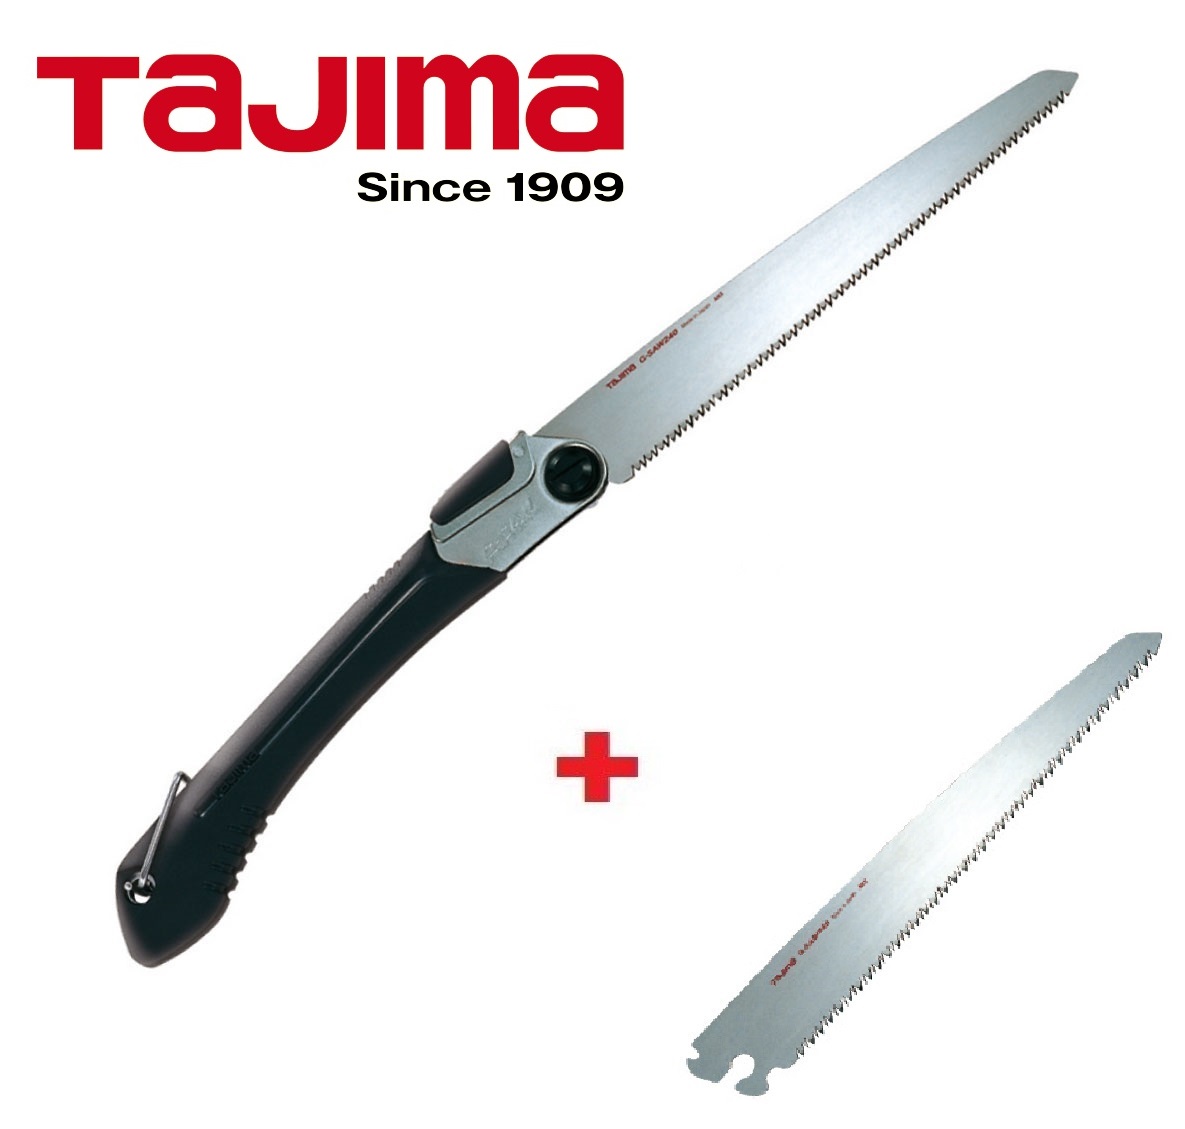 Ножовка складная TAJIMA Rapid-Pull G-Saw GK-G210 (210мм) + запасное полотно GKBG210(210мм) ножовка японская silky м00013209 складная изогнутое лезвие 210мм